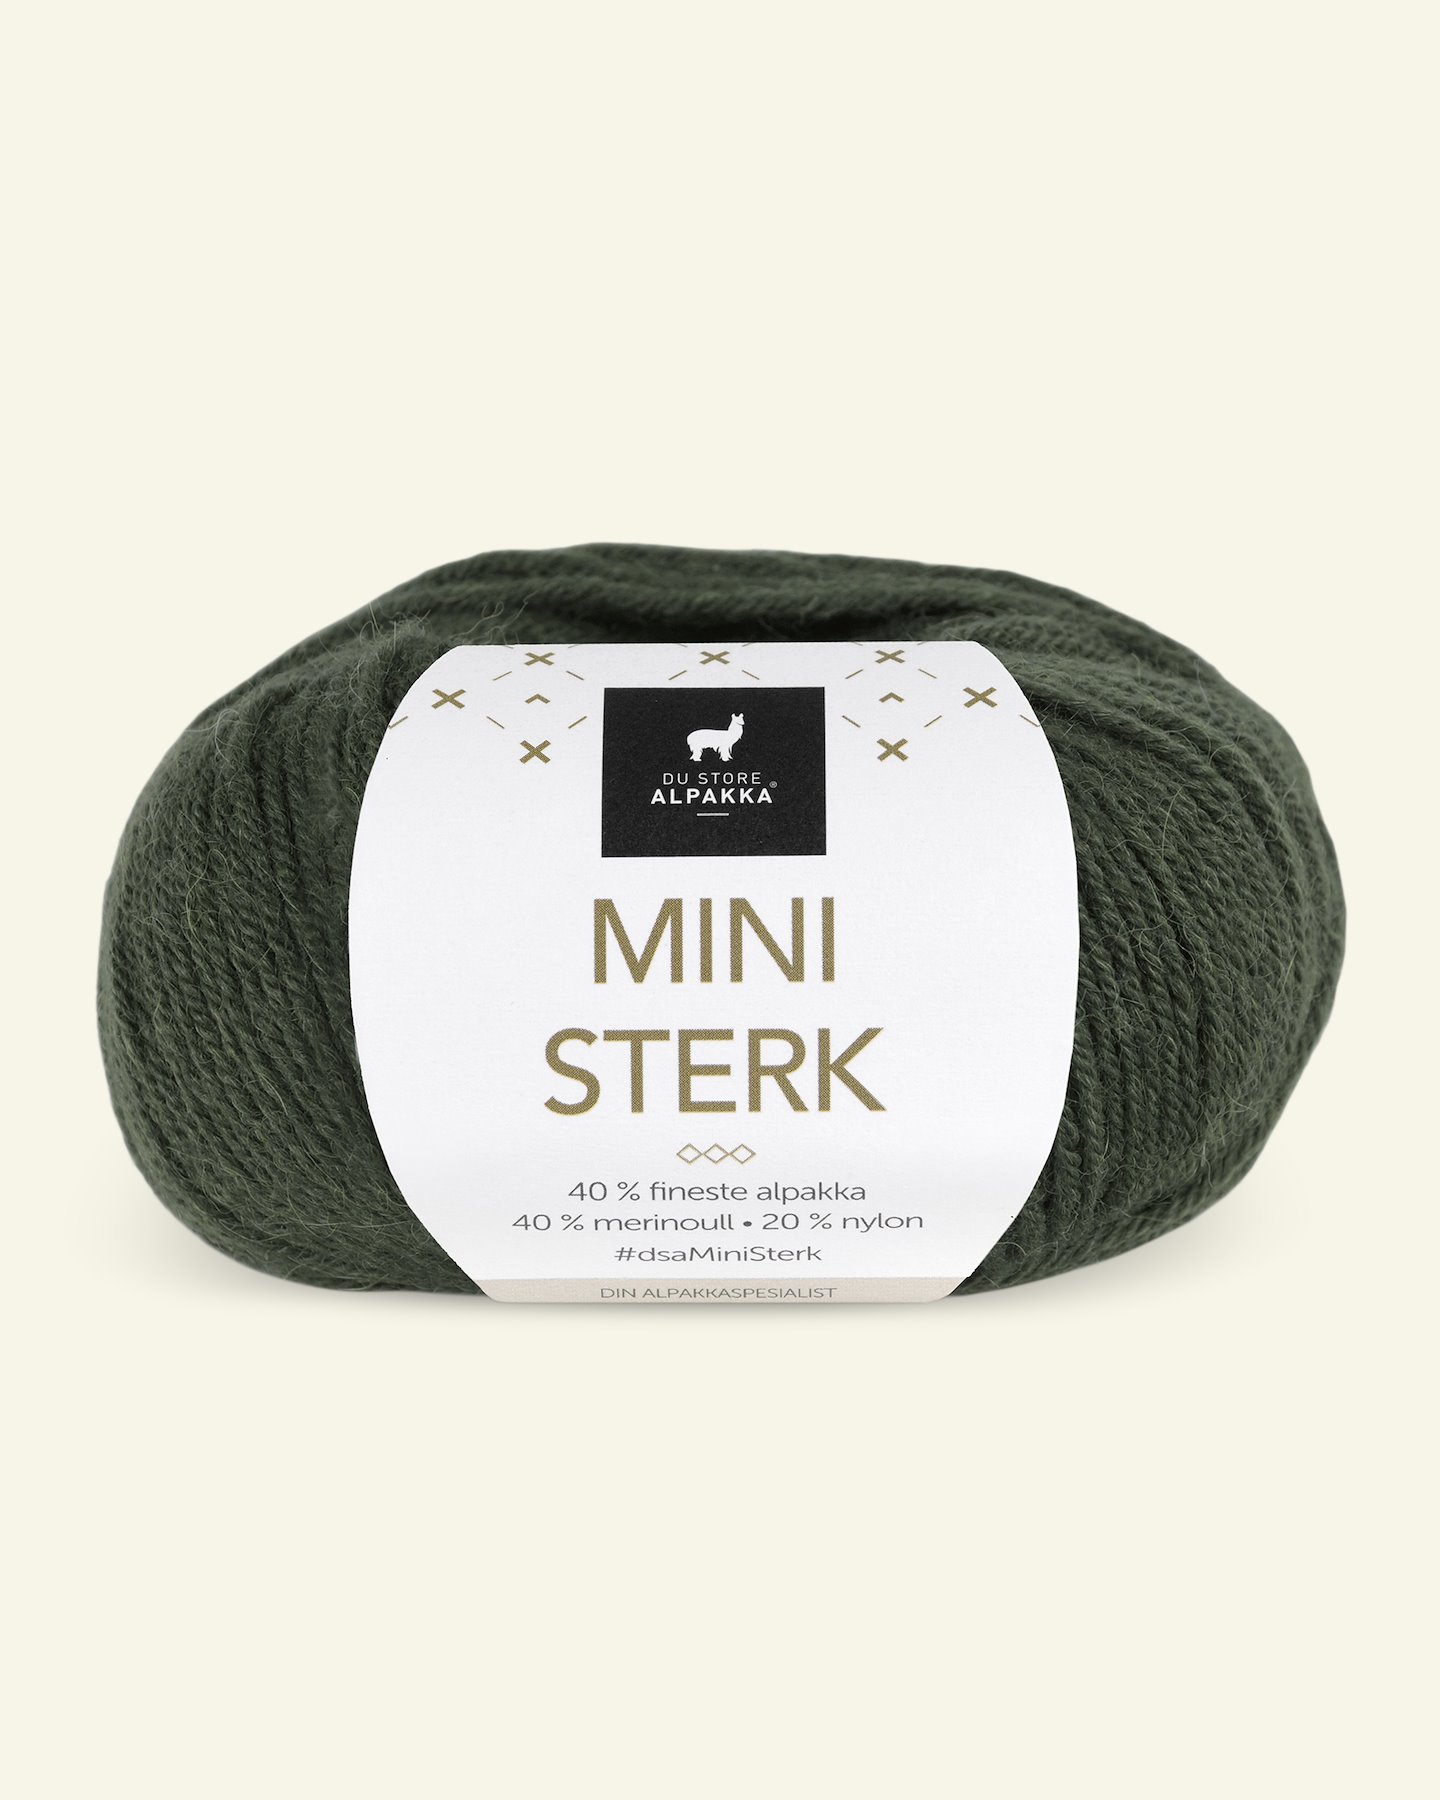 Du Store Alpakka, alpaca merino mixgarn "Mini Sterk", flaskegrøn (860) 90000641_pack